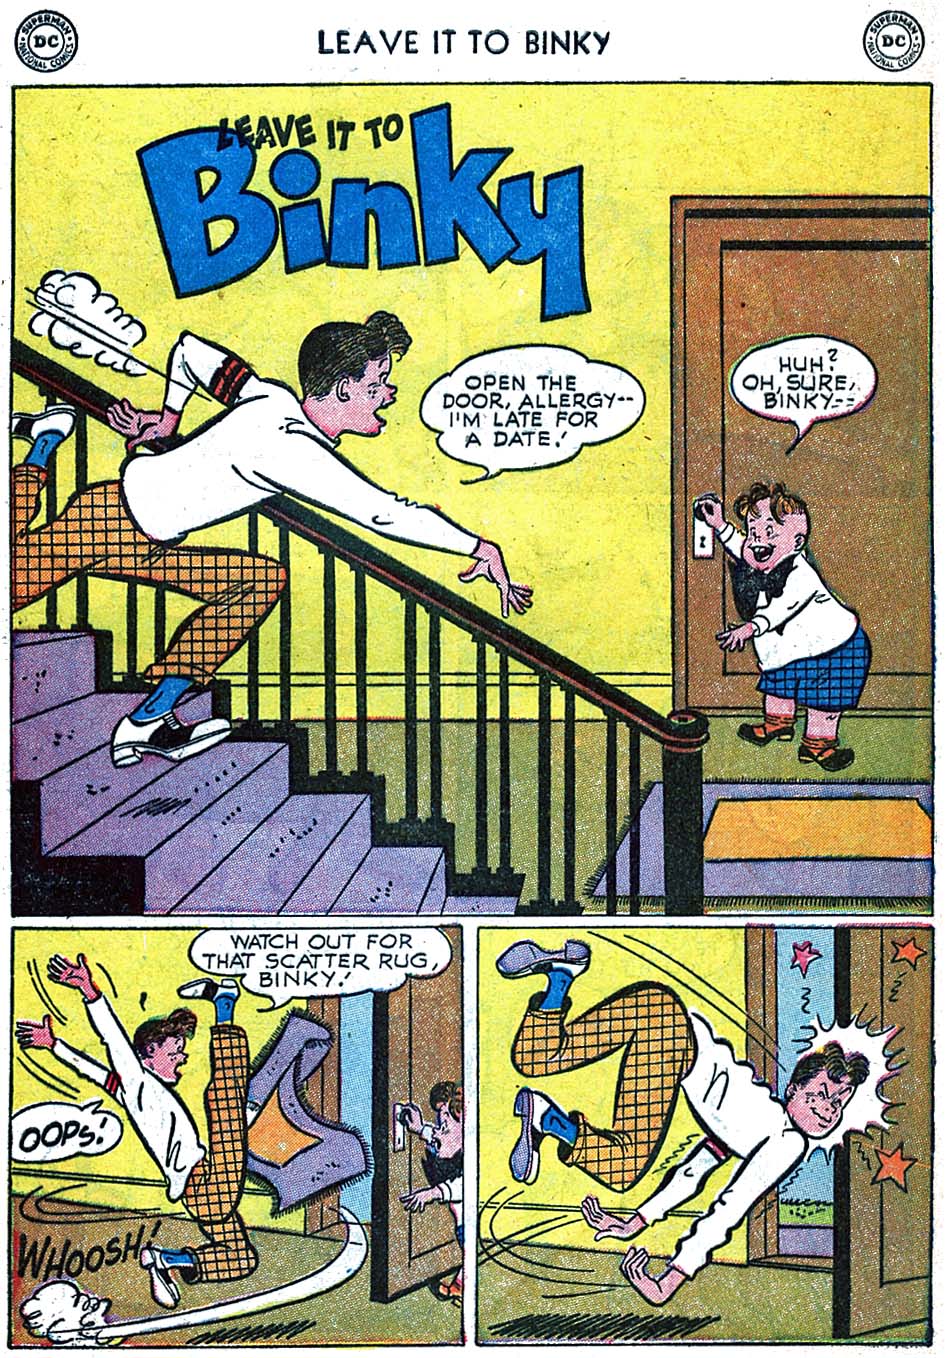 Read online Leave it to Binky comic -  Issue #38 - 11